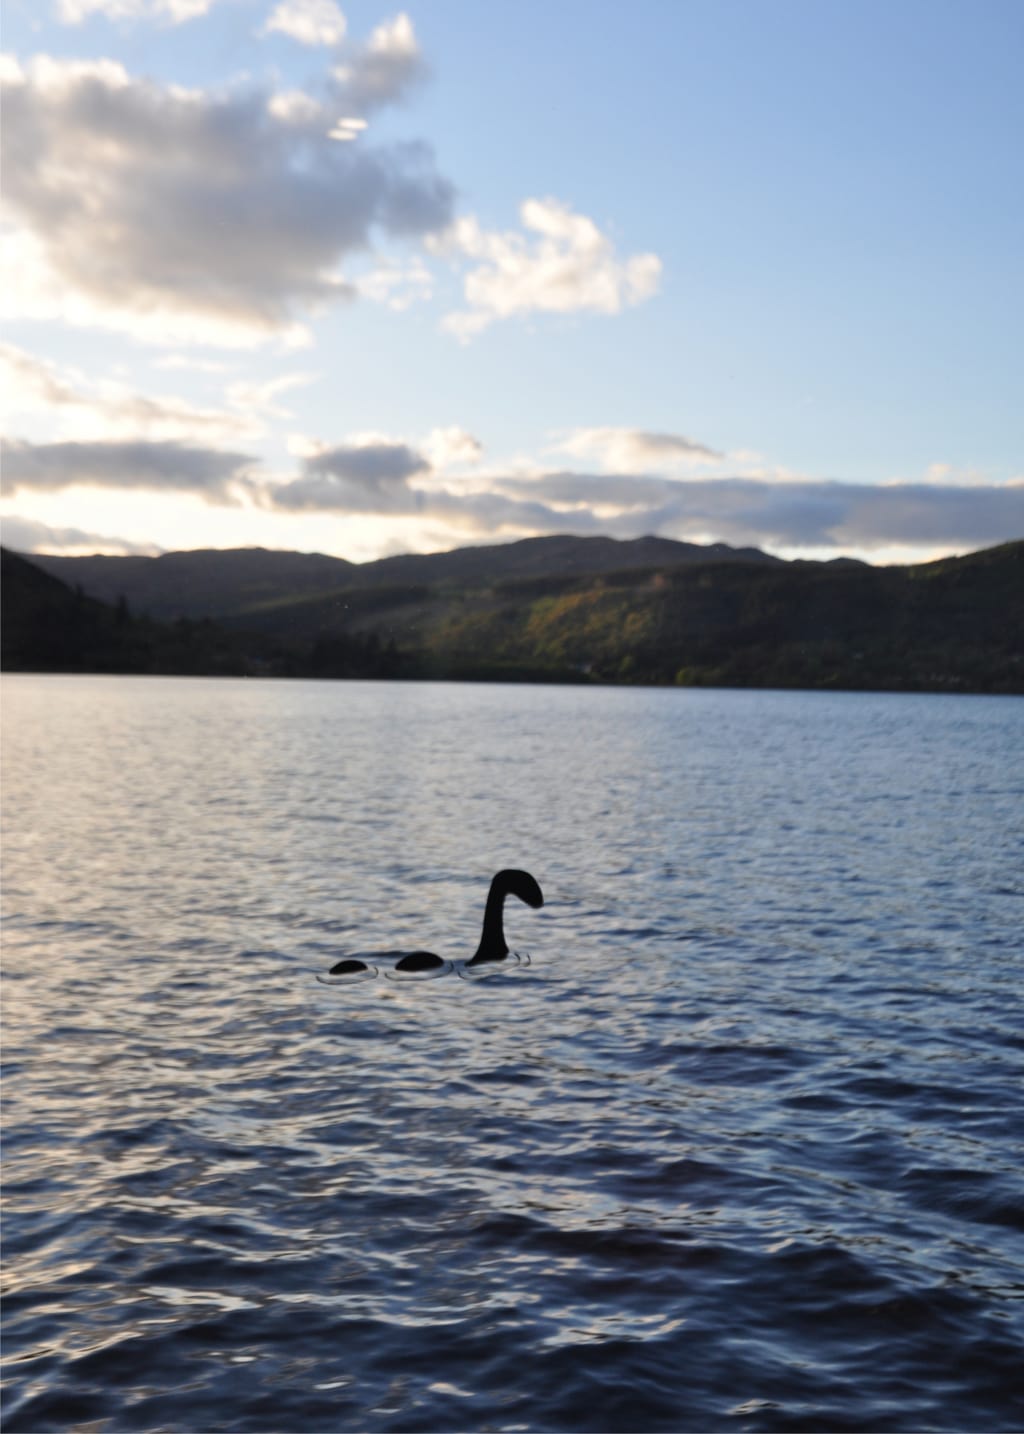 Nessie Monster in Loch Ness